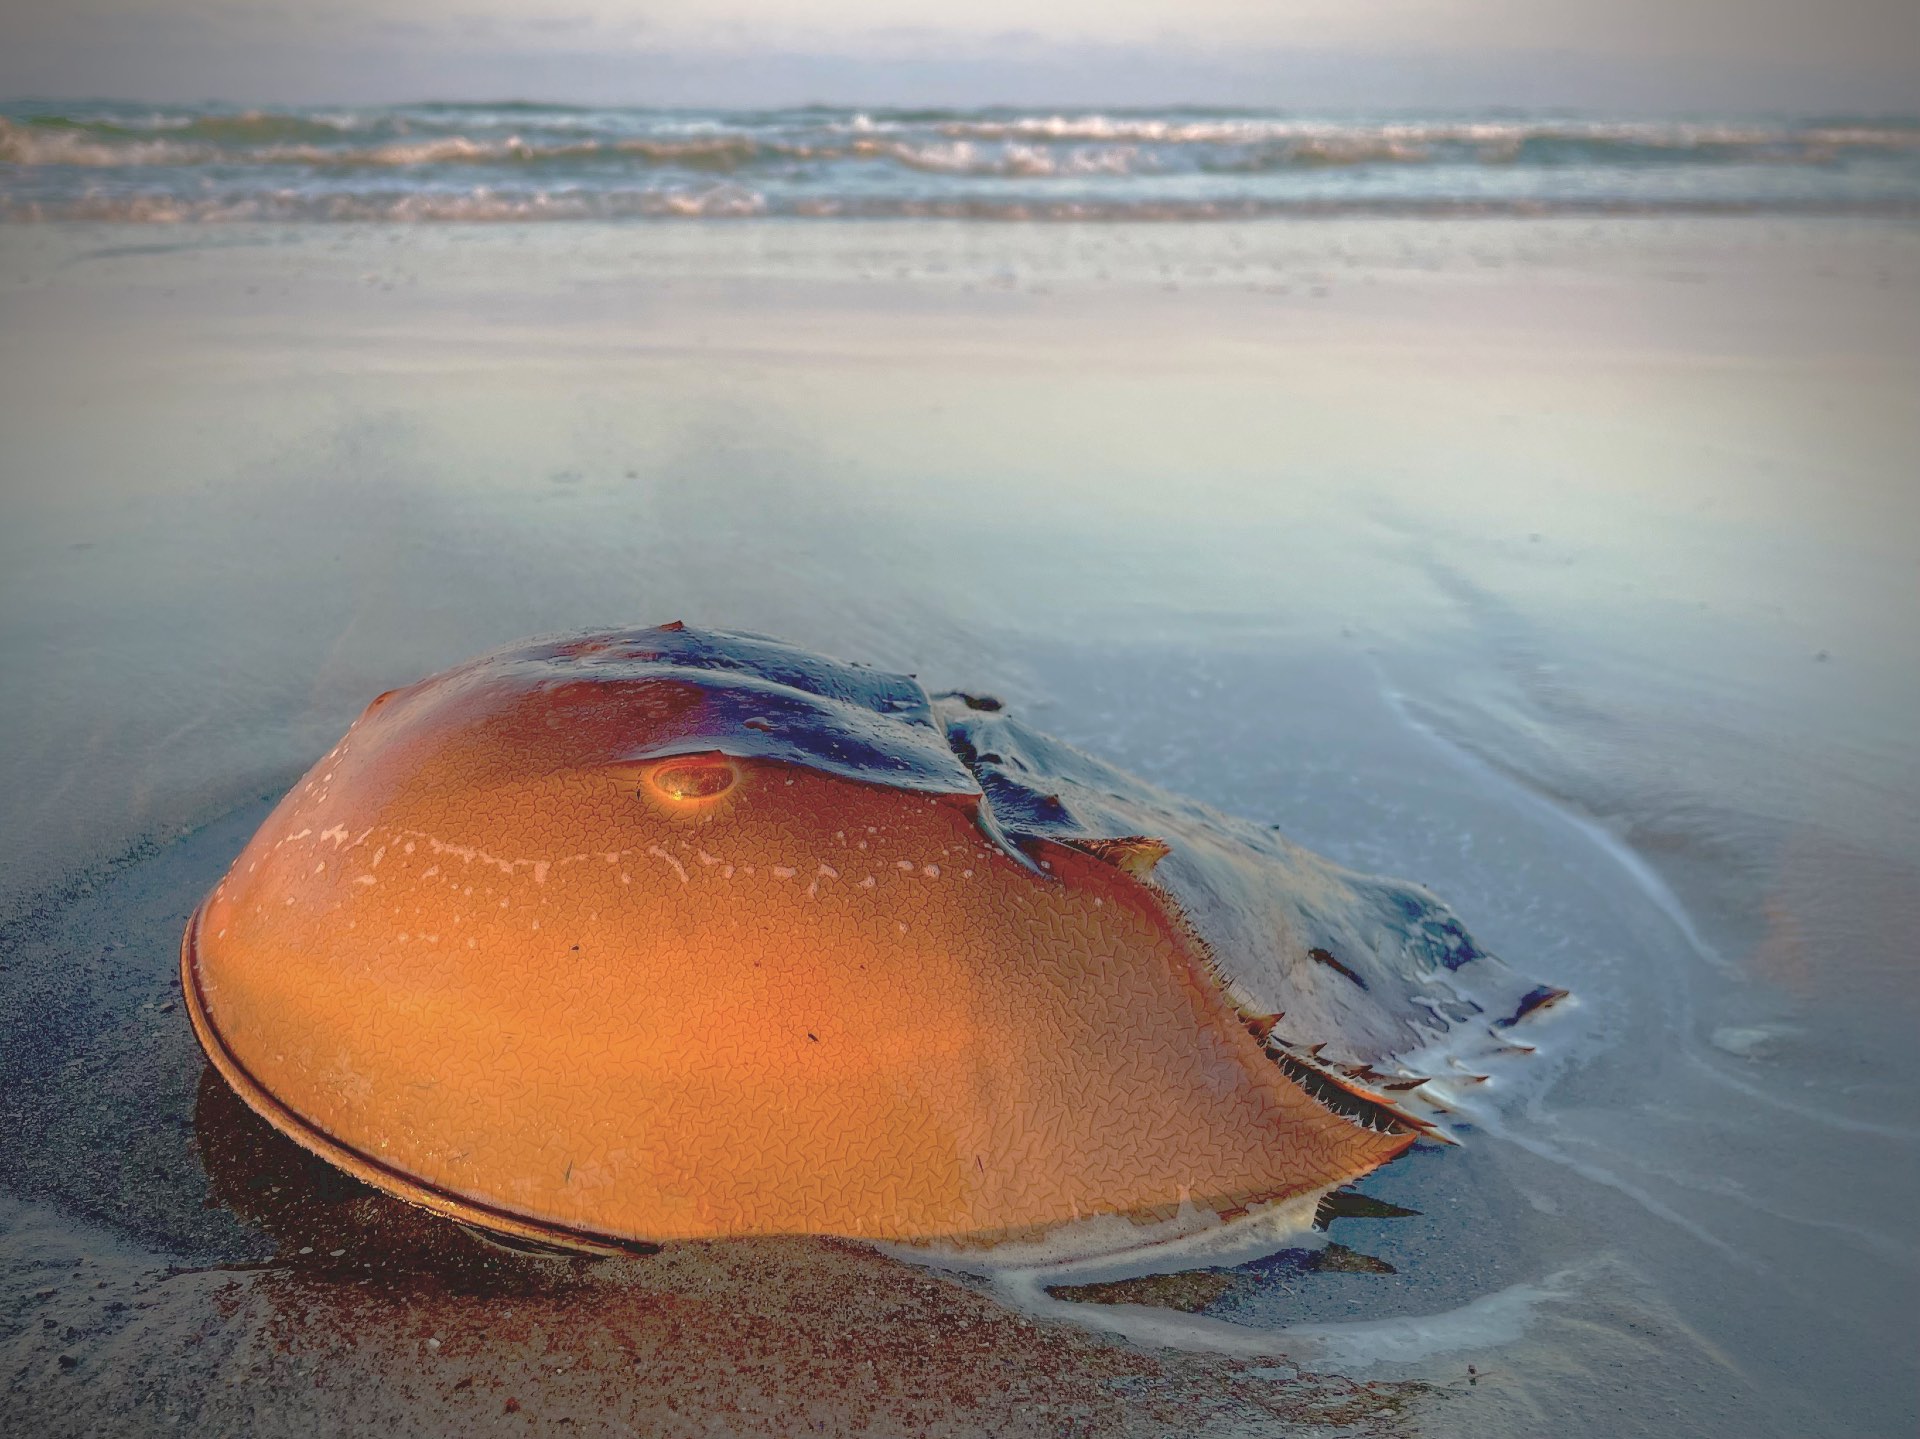 Horseshoe crab on the beach